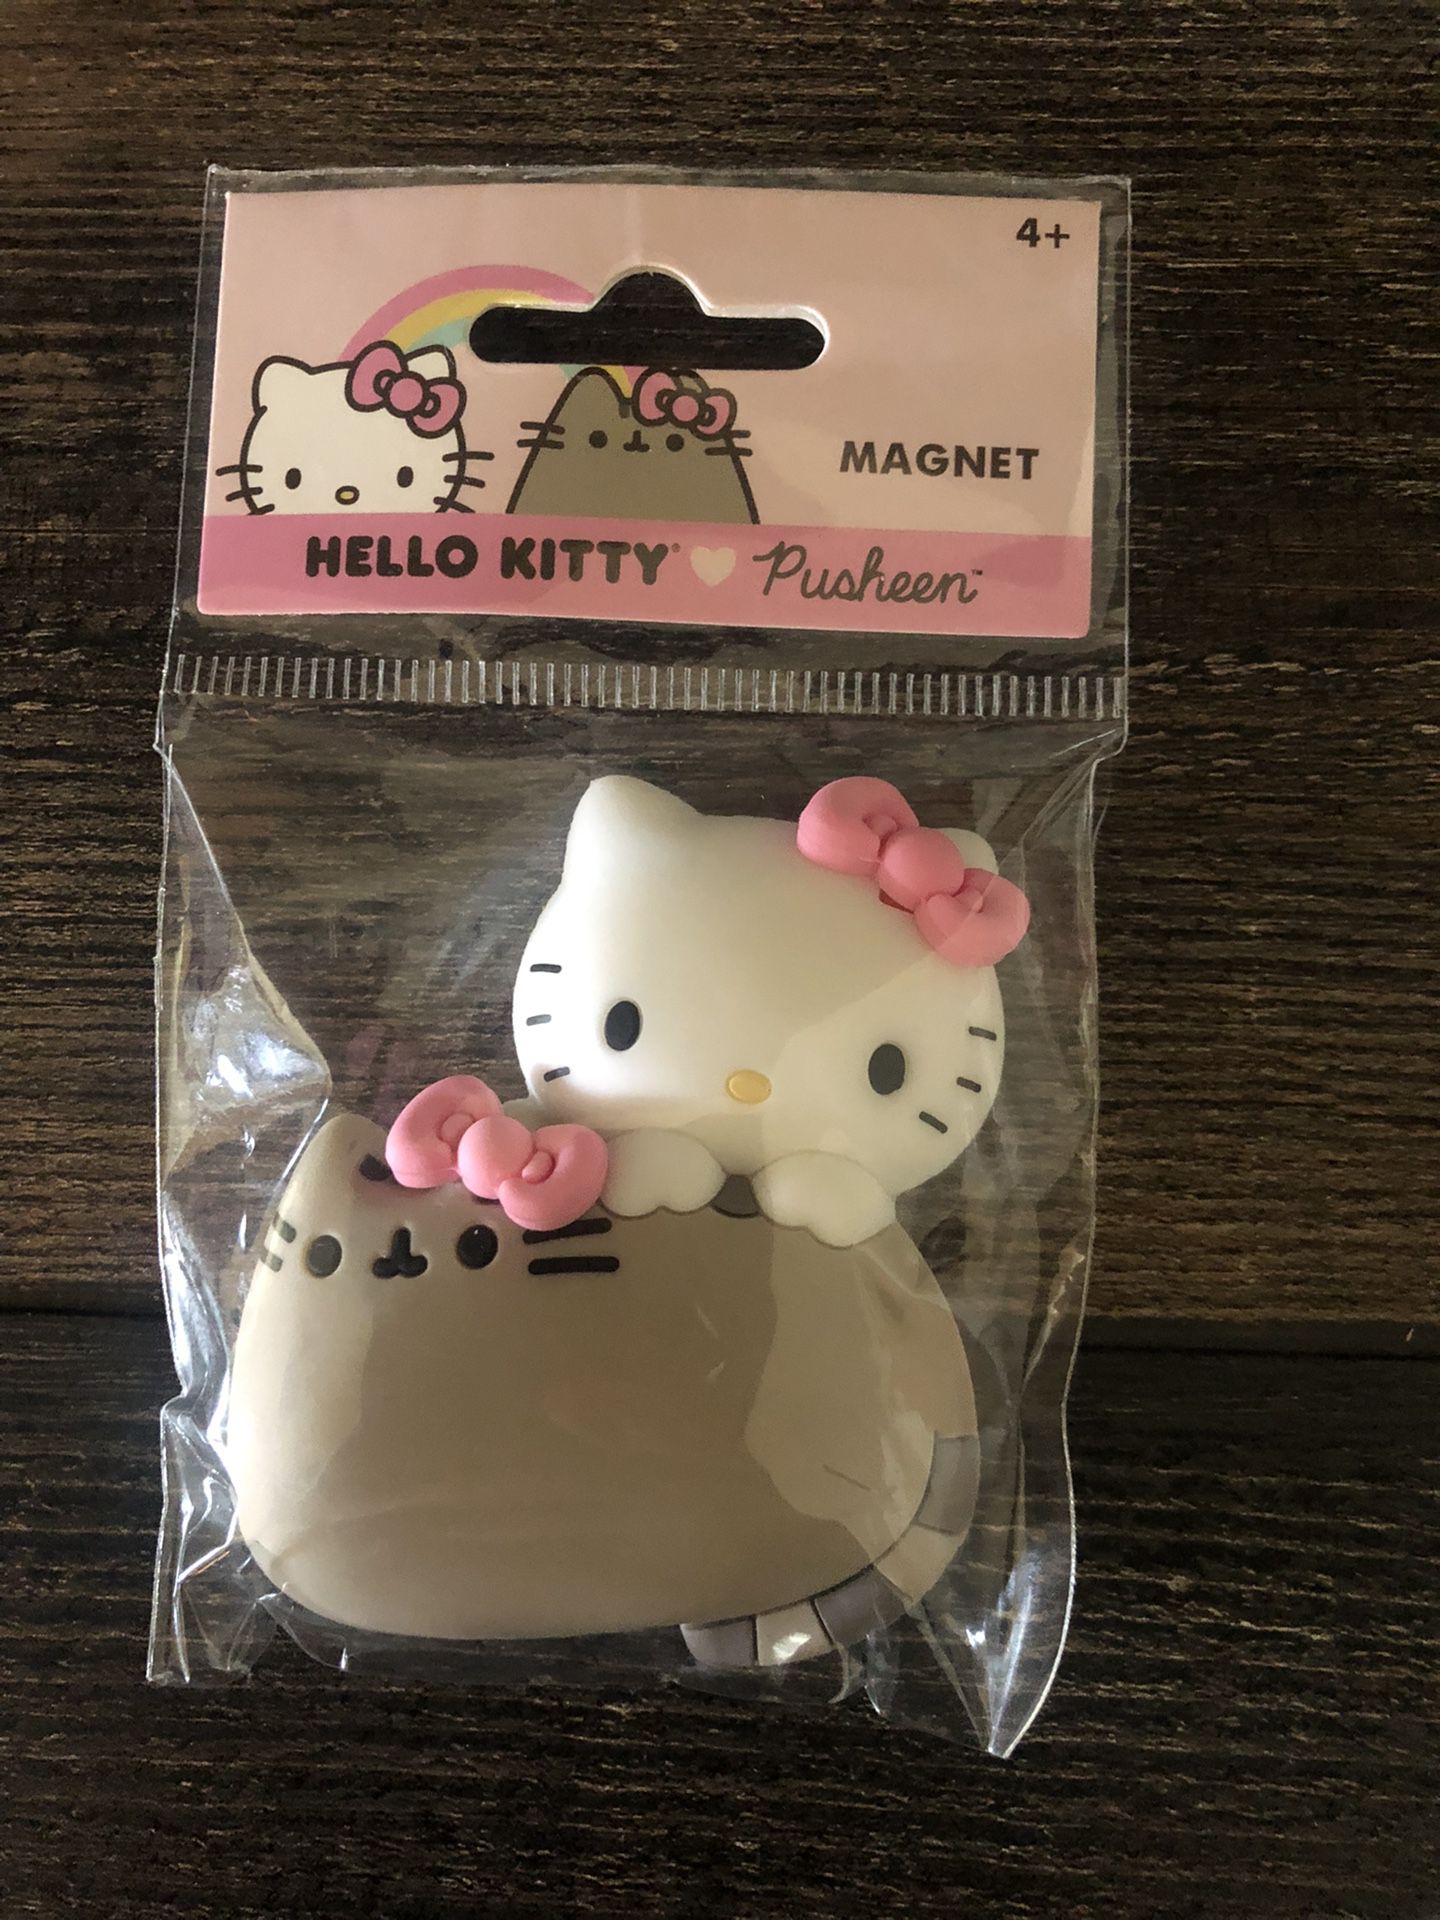 Brand New Hello Kitty Pusheen magnet